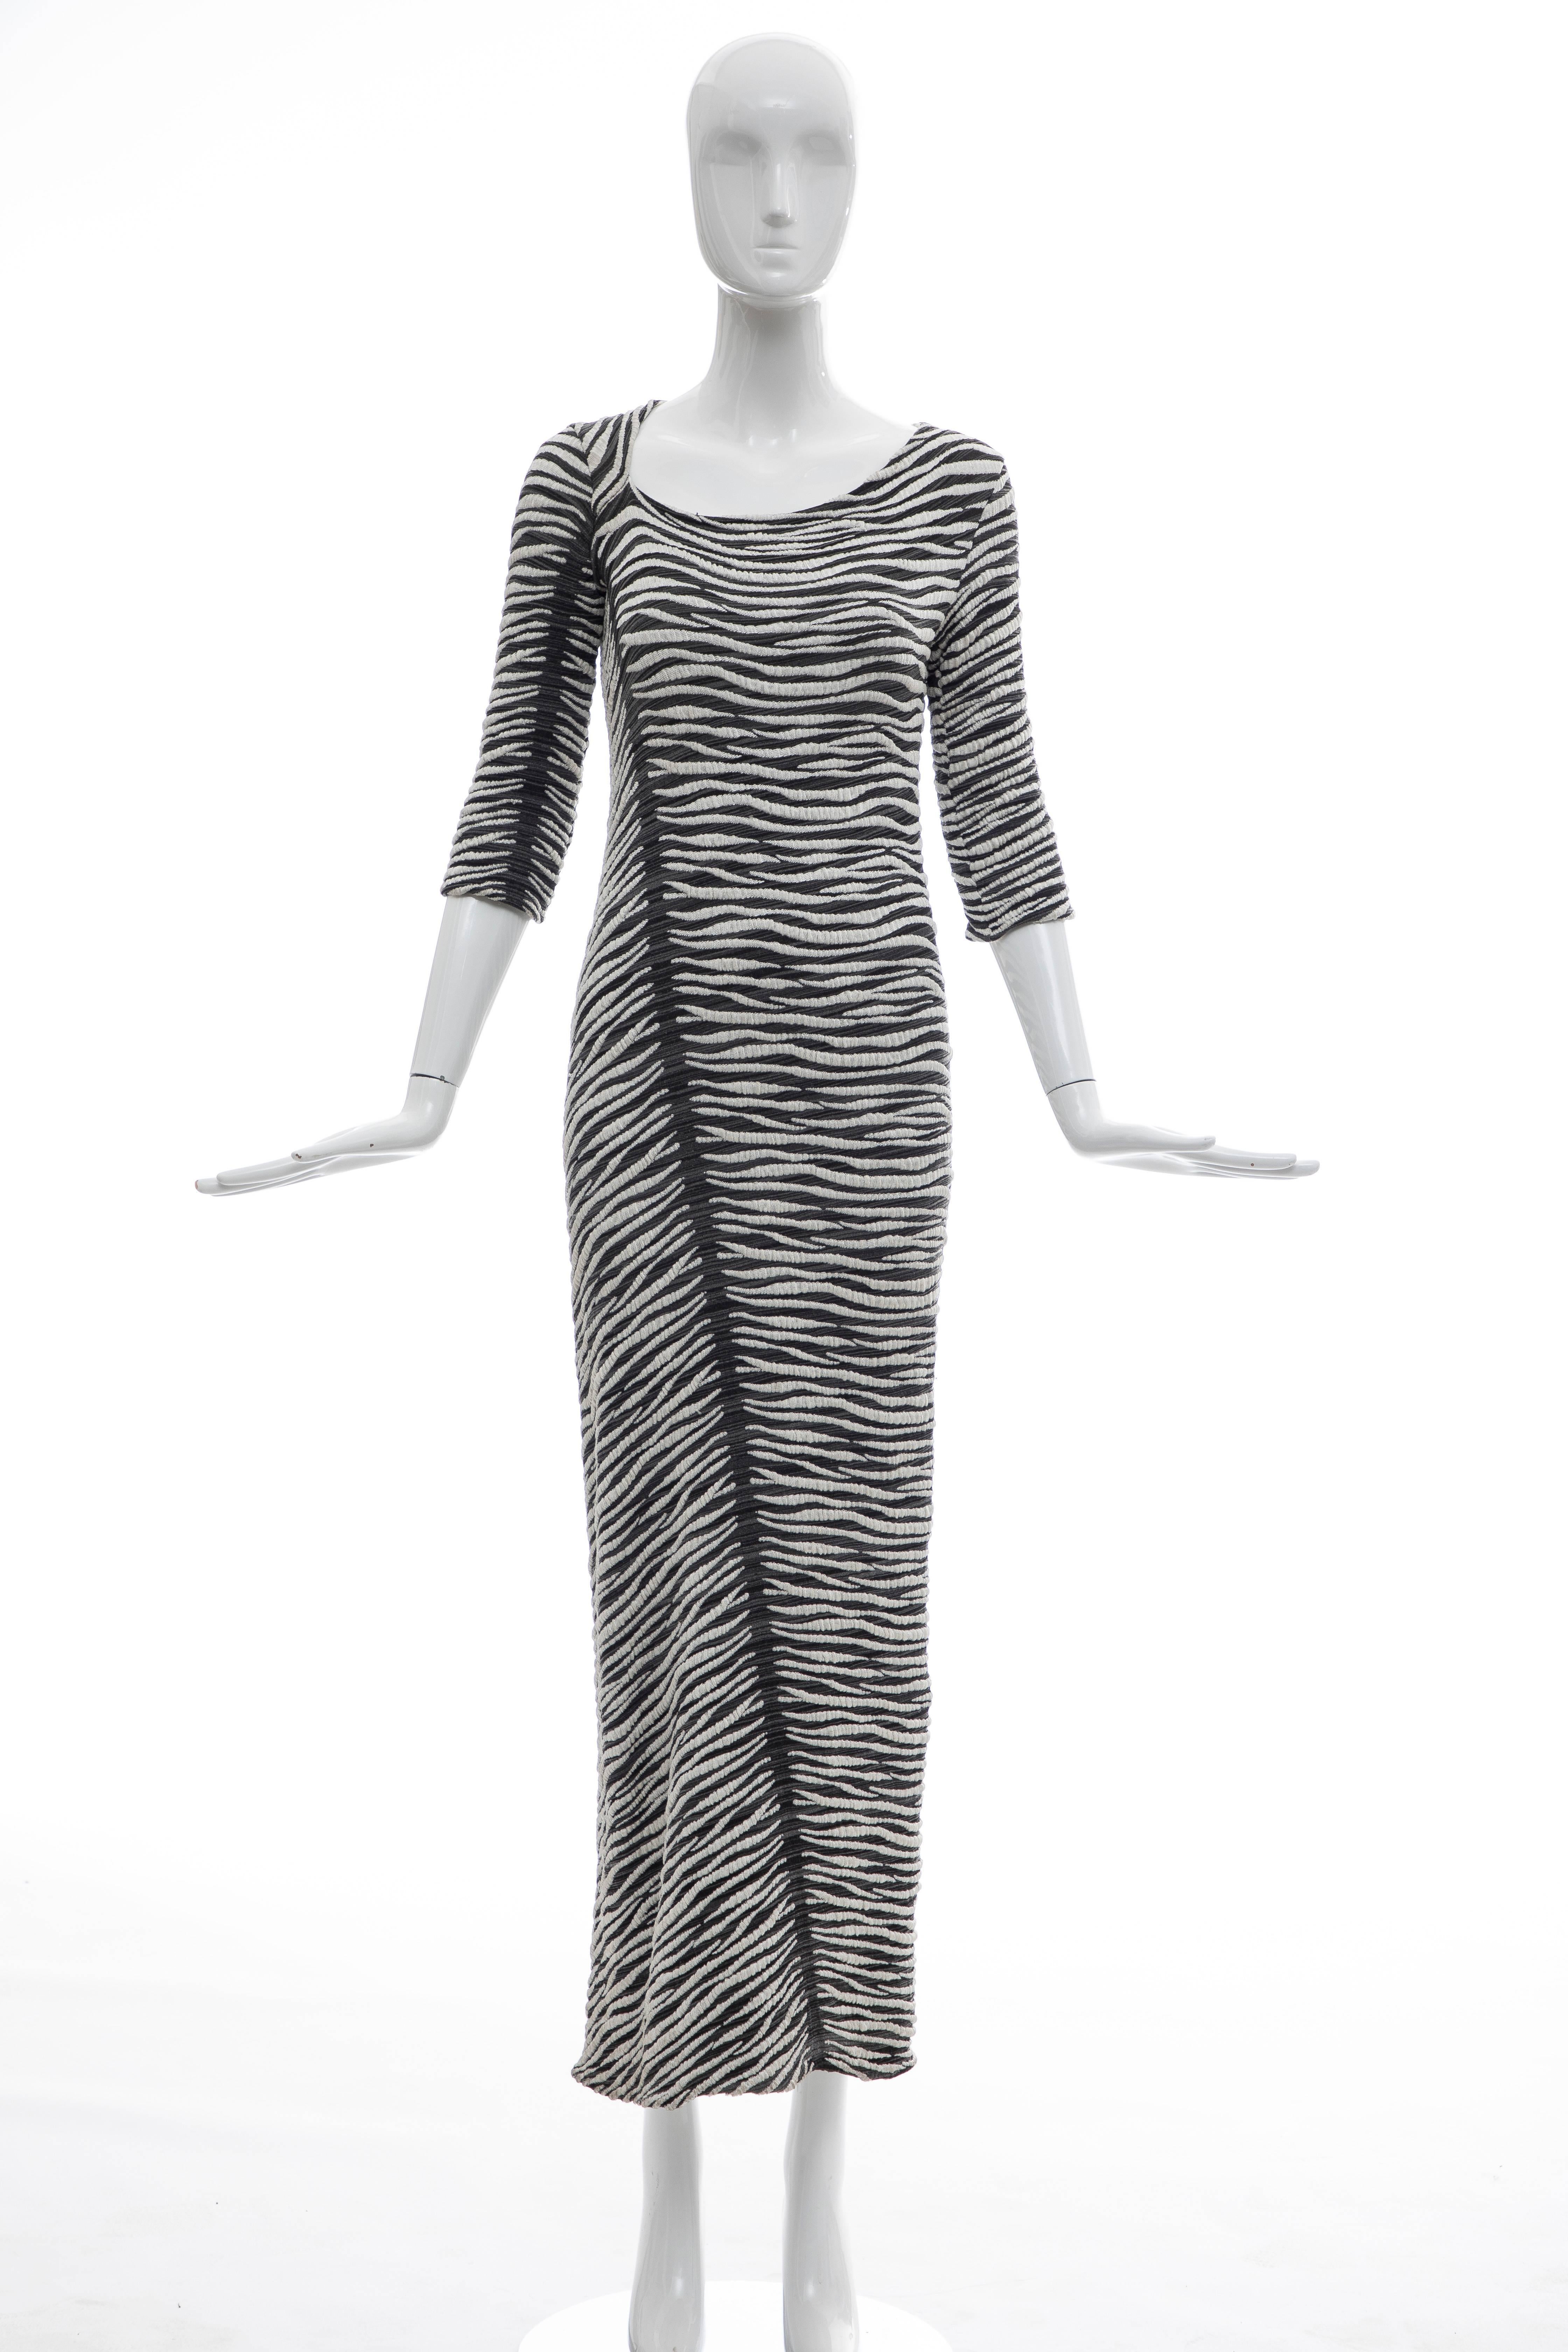 Gianfranco Ferre, circa 1990's long sleeve stretch knit dress.

Bust 36, Waist 32, Hips 38, Length 48